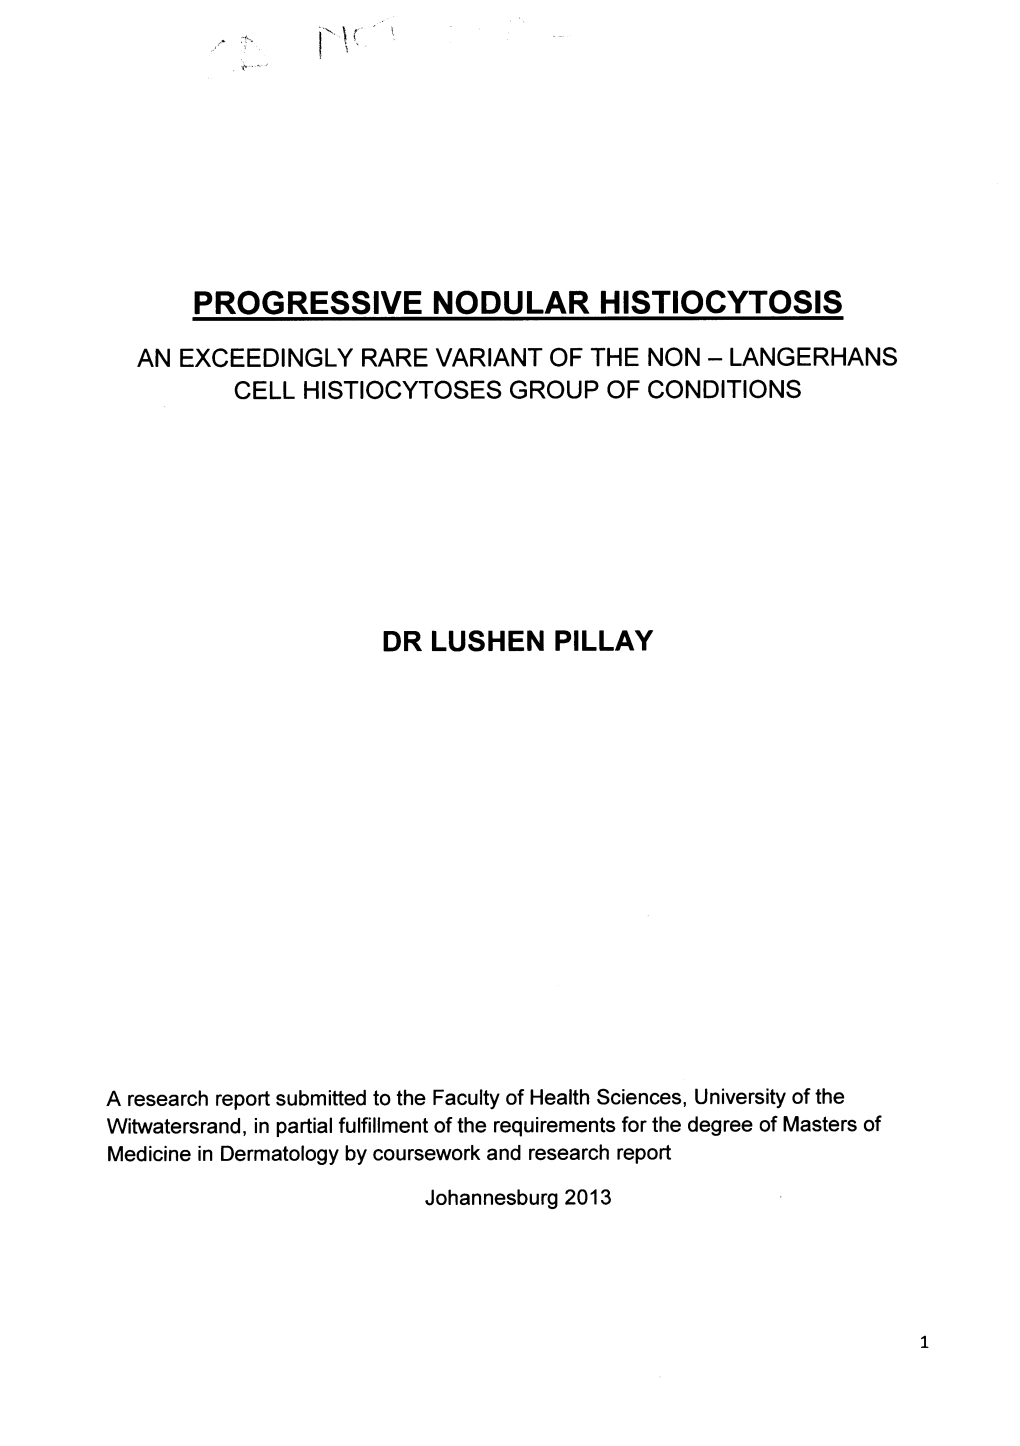 Progressive Nodular Histiocytosis